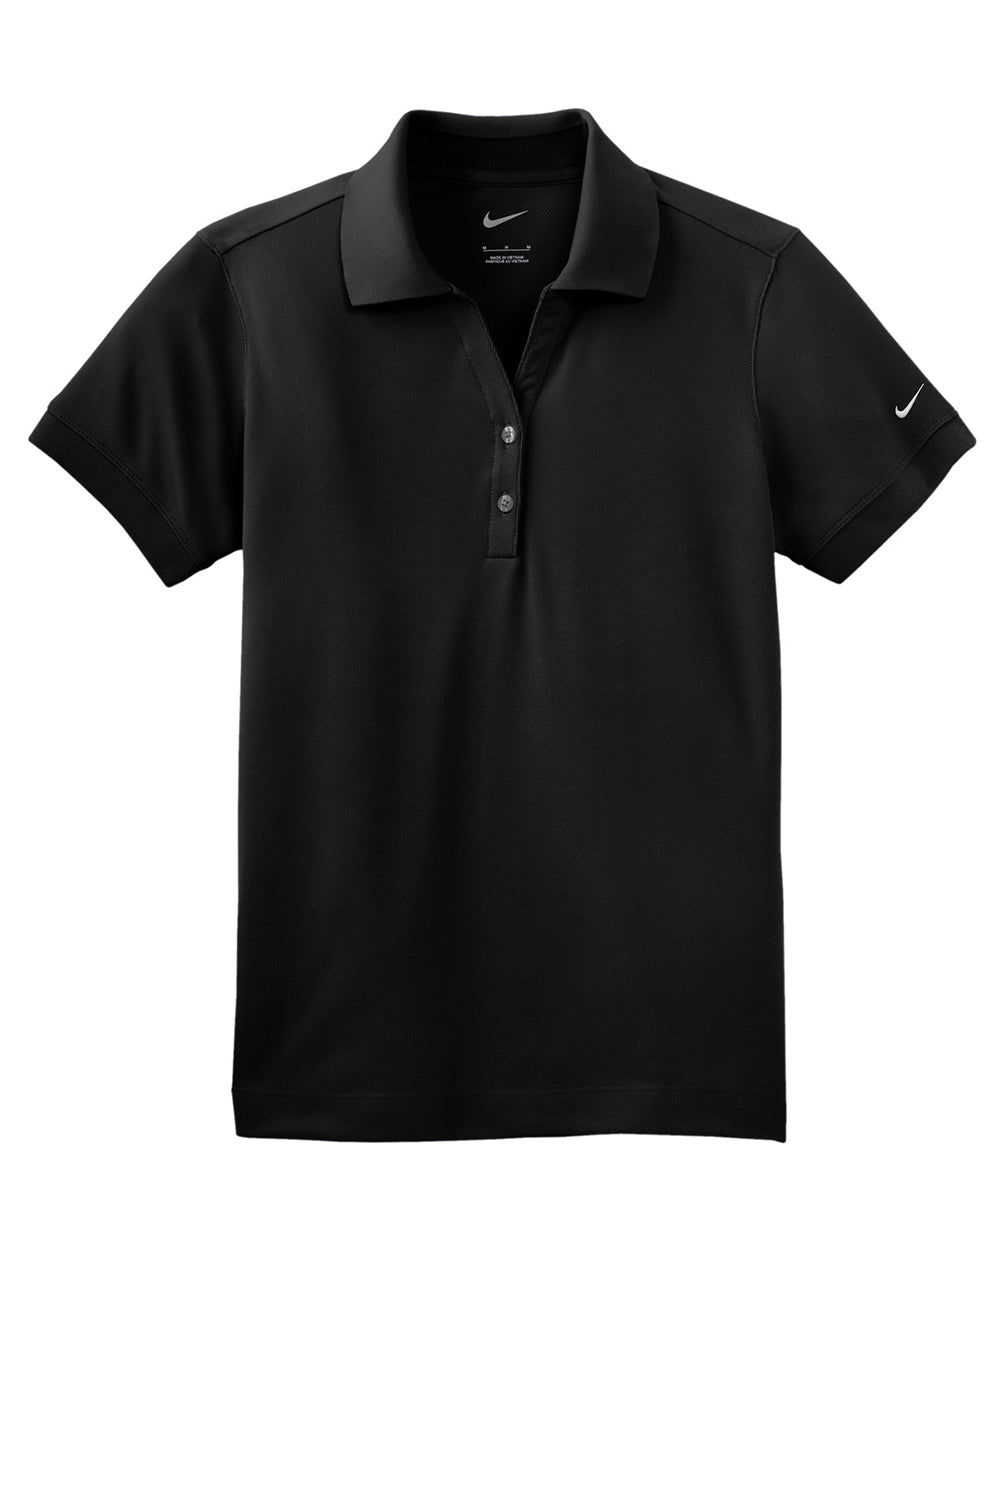 Nike 286772 Womens Classic Dri-Fit Moisture Wicking Short Sleeve Polo Shirt Black Flat Front